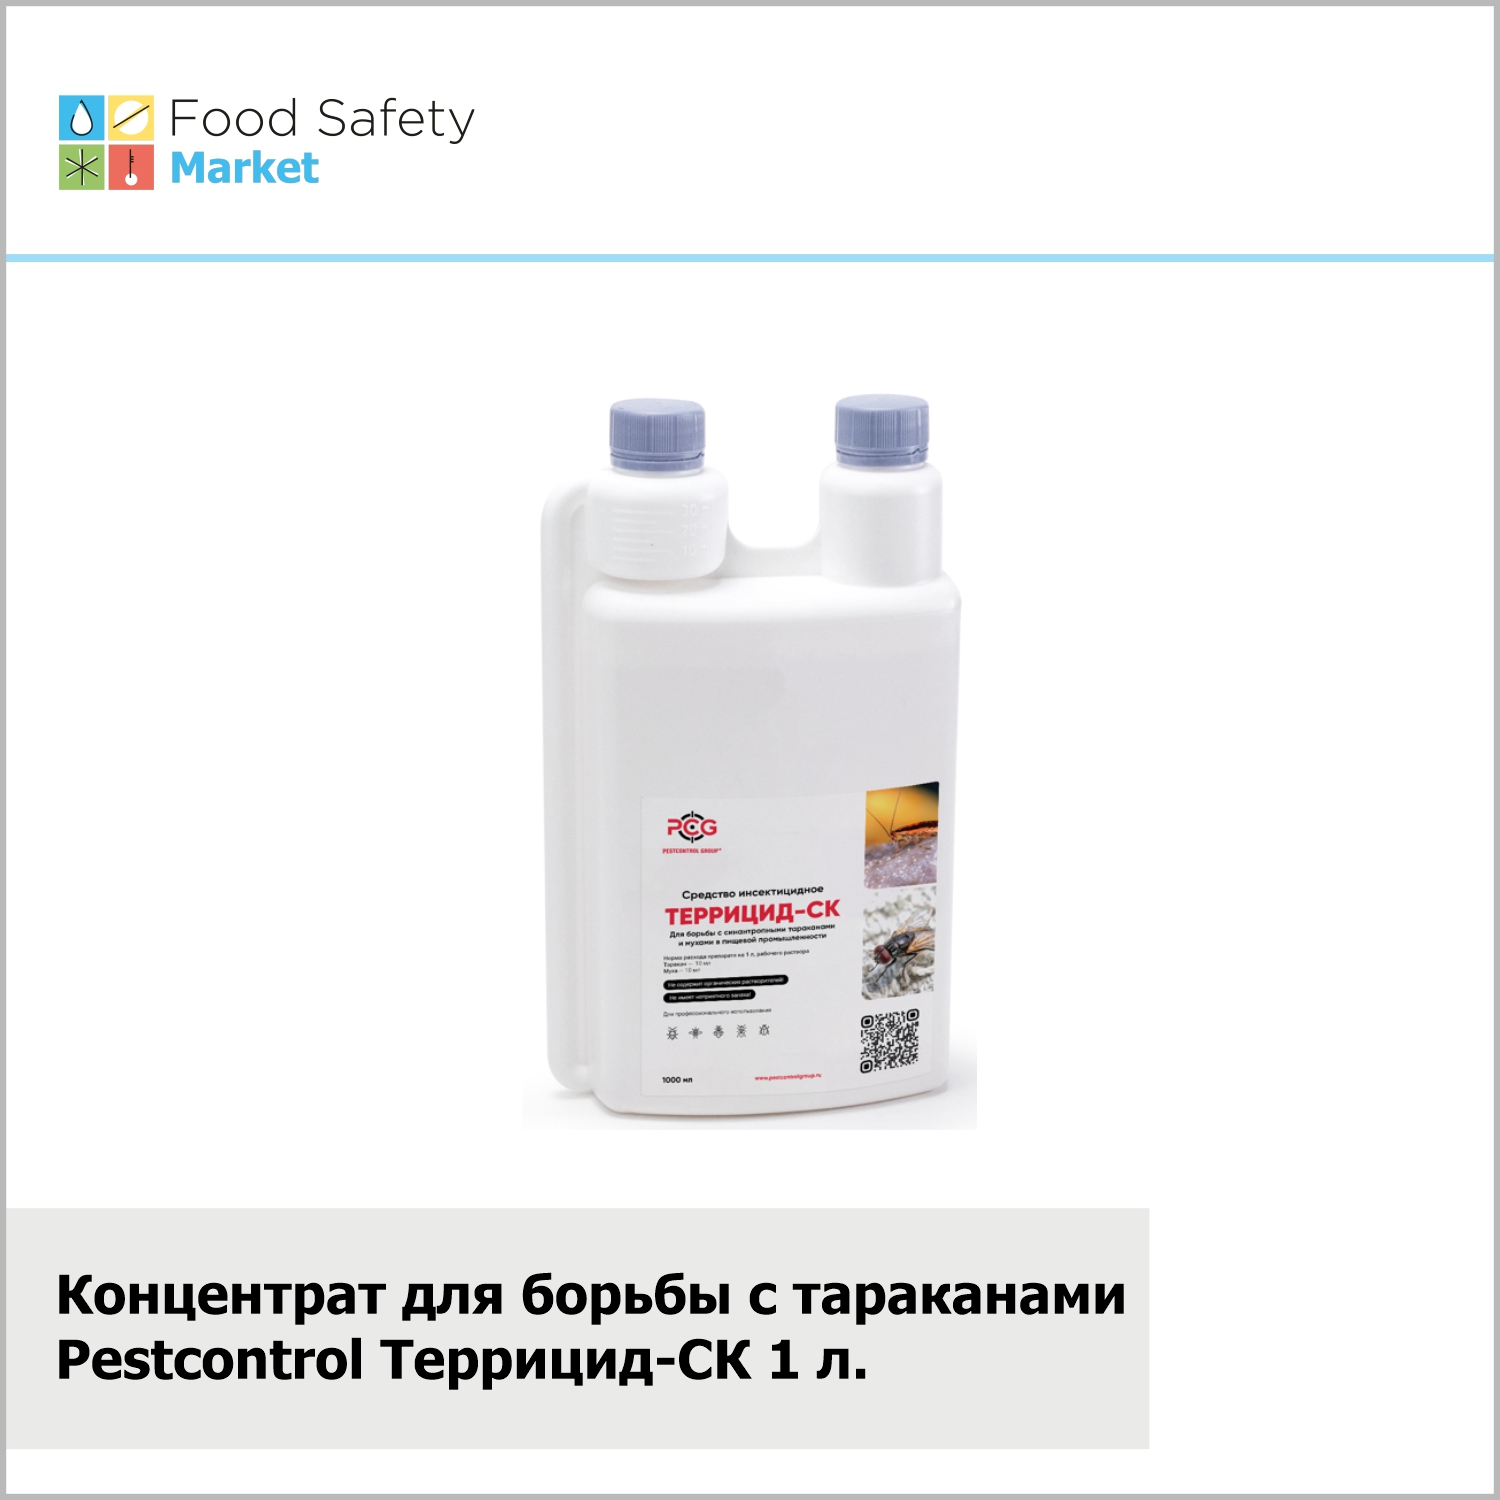 Концентрат для борьбы с тараканами "Pestcontrol" "Террицид-СК" 1000 мл.